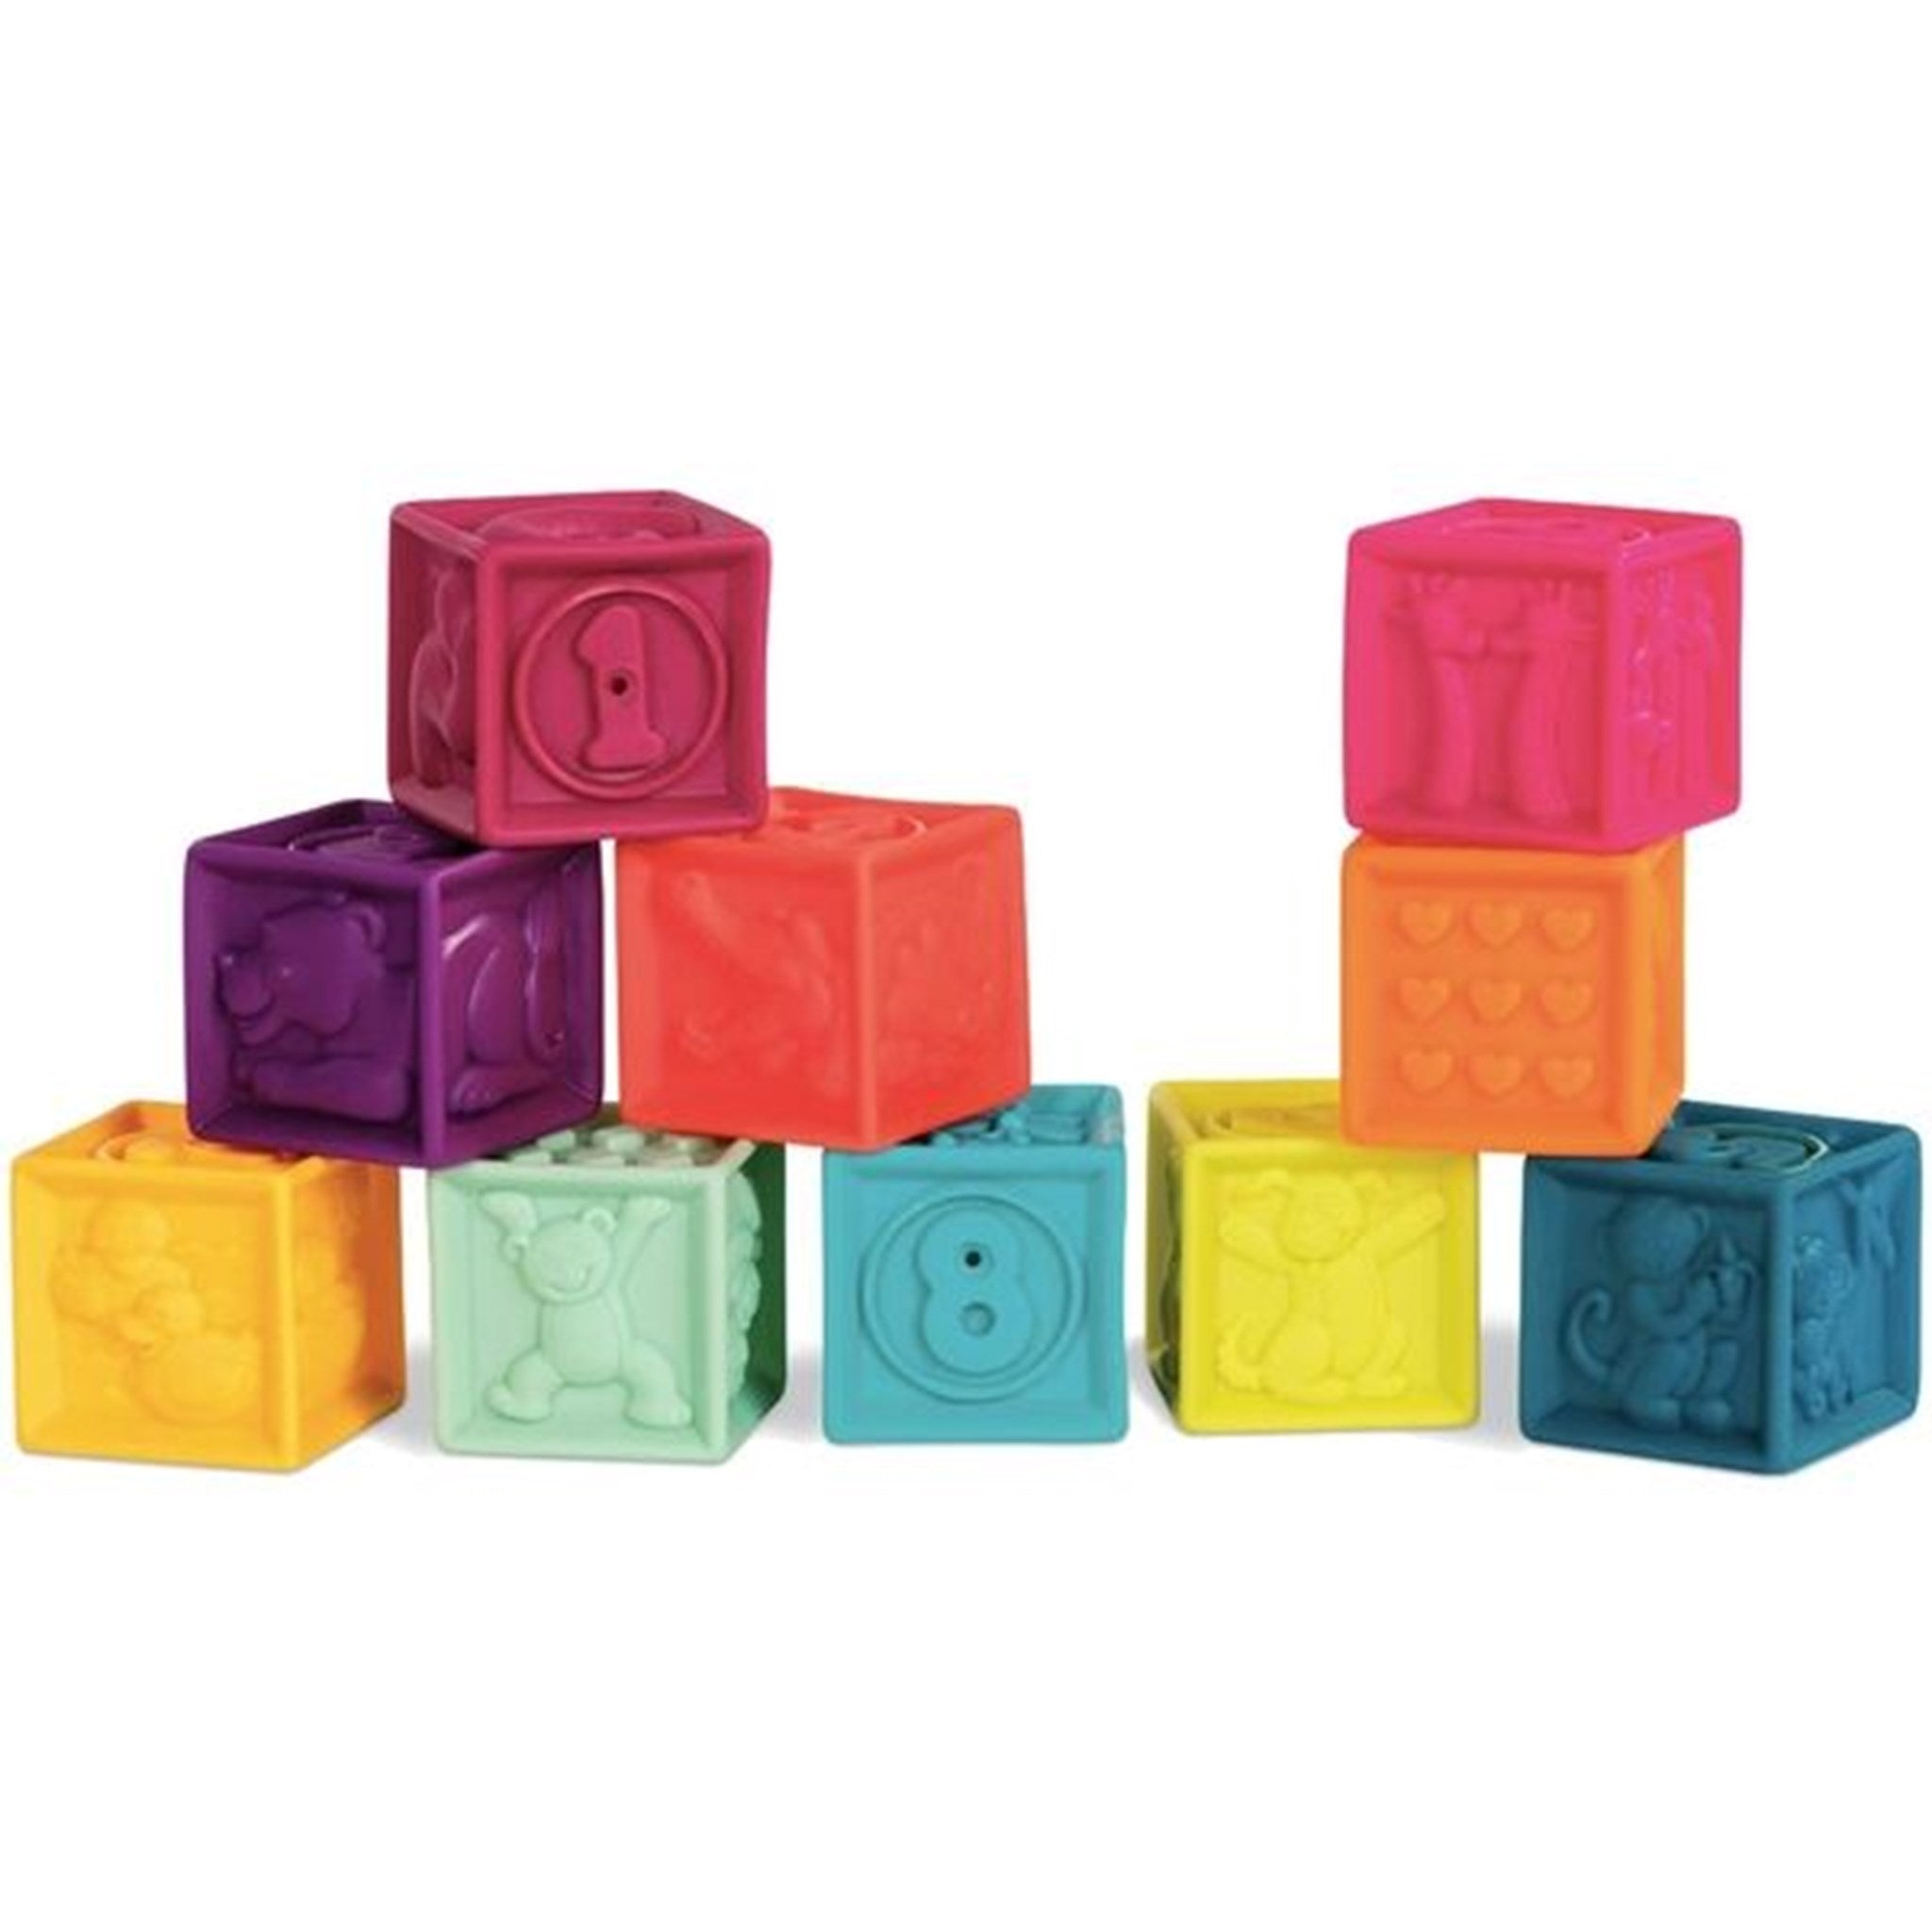 B-toys One Two - Soft Blocks Mint